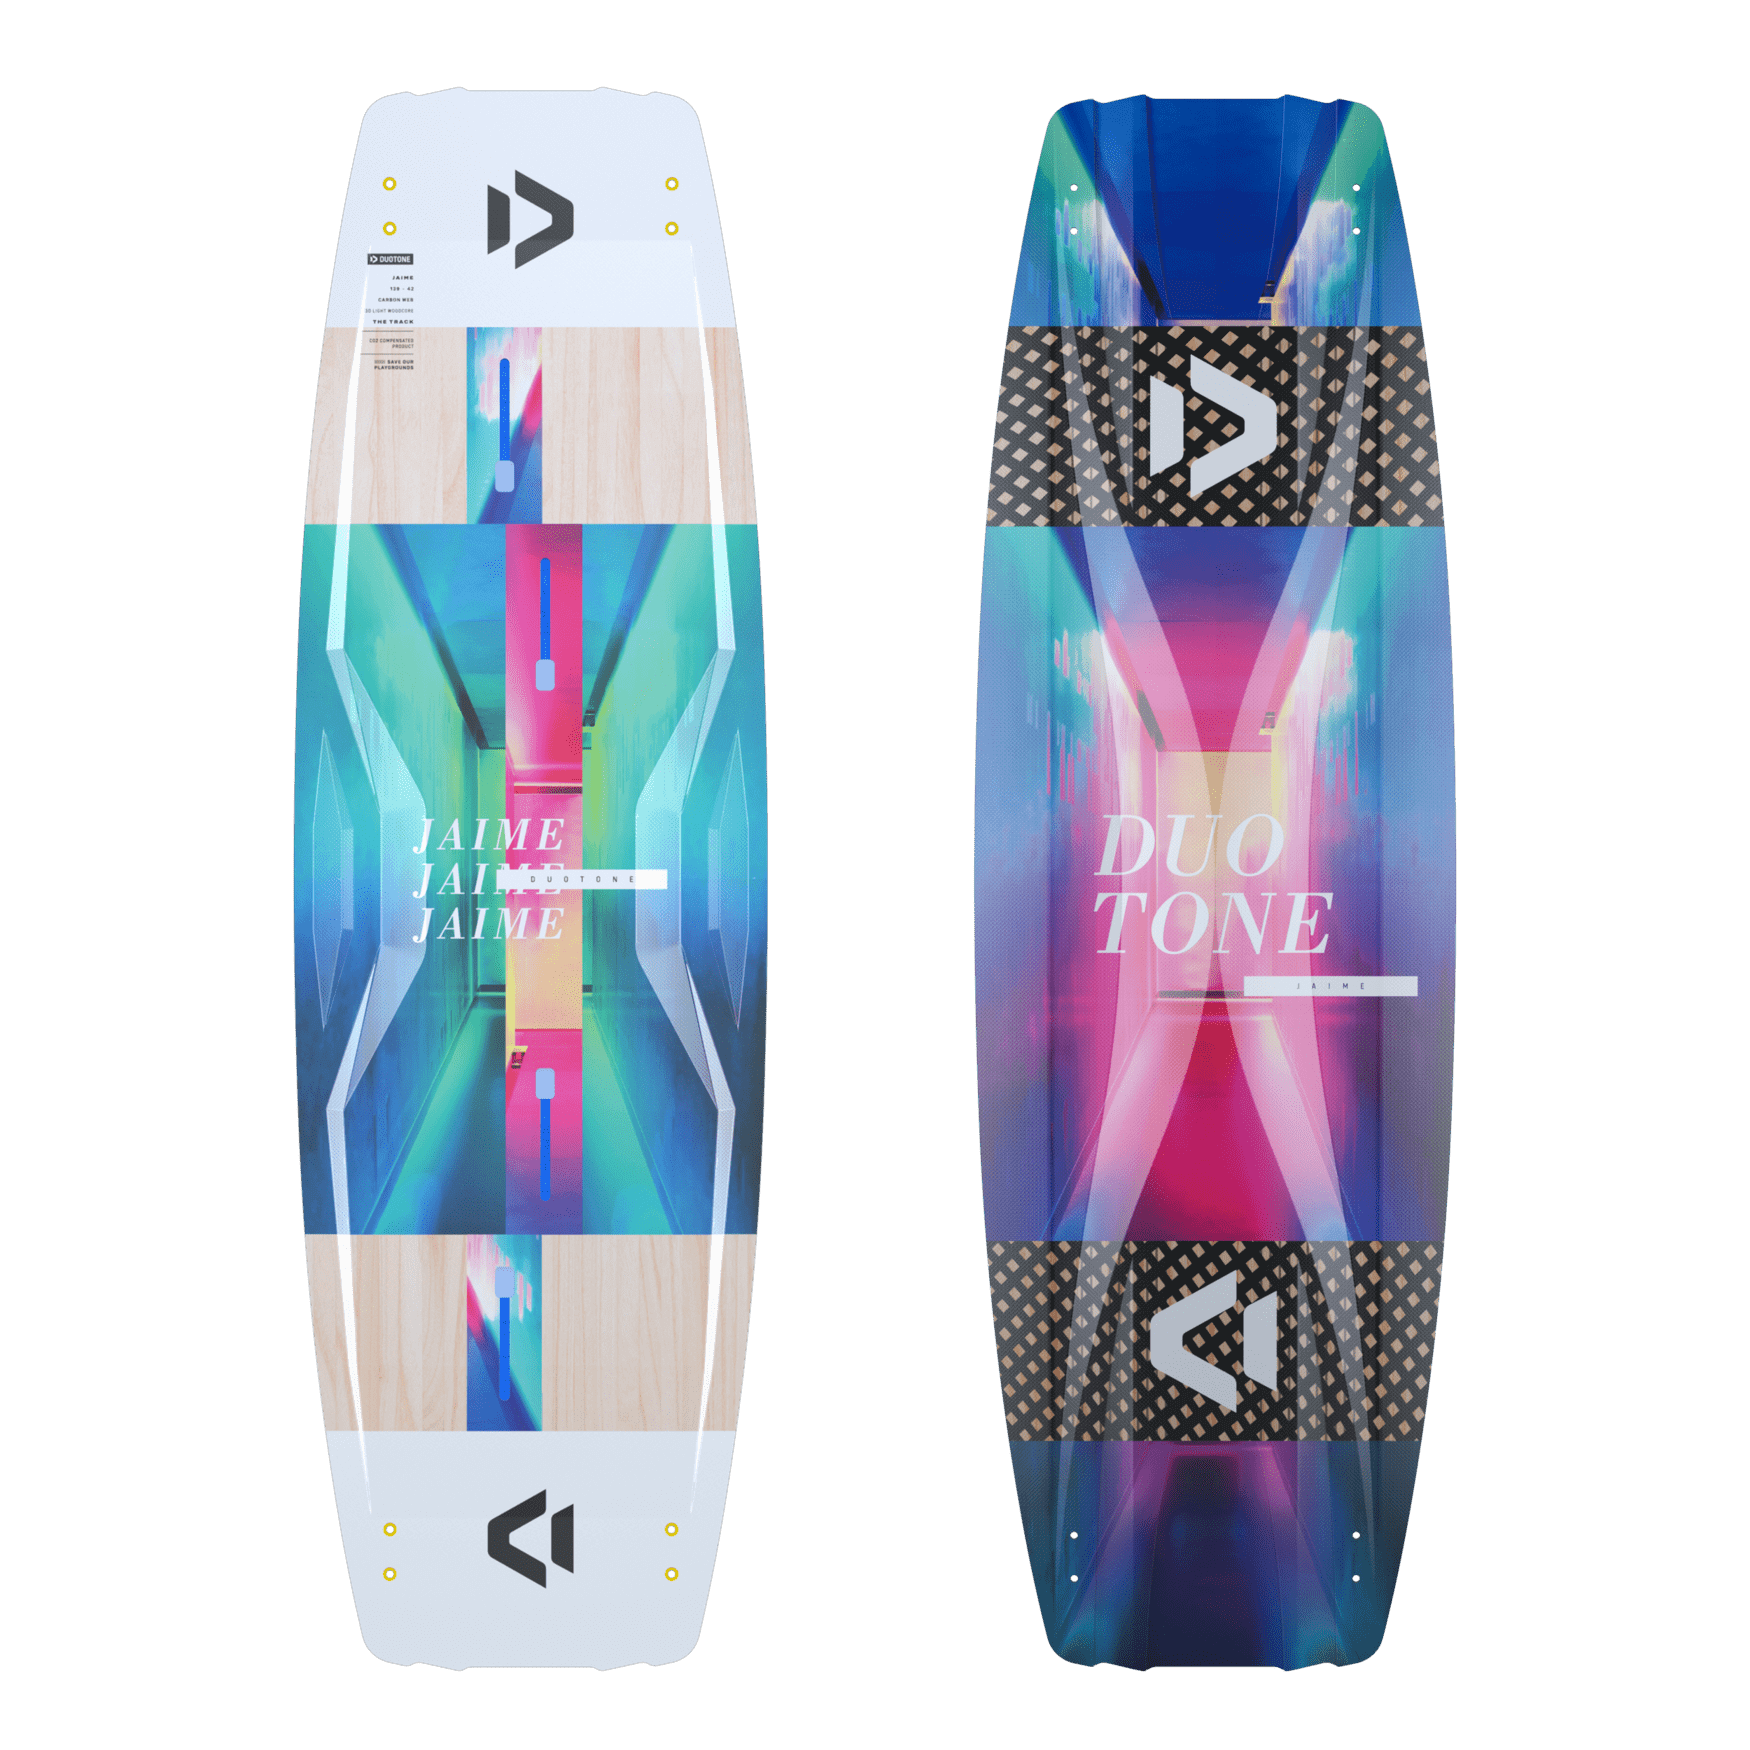 Duotone Jaime 2021 - Sizes Vary - Urban Surf